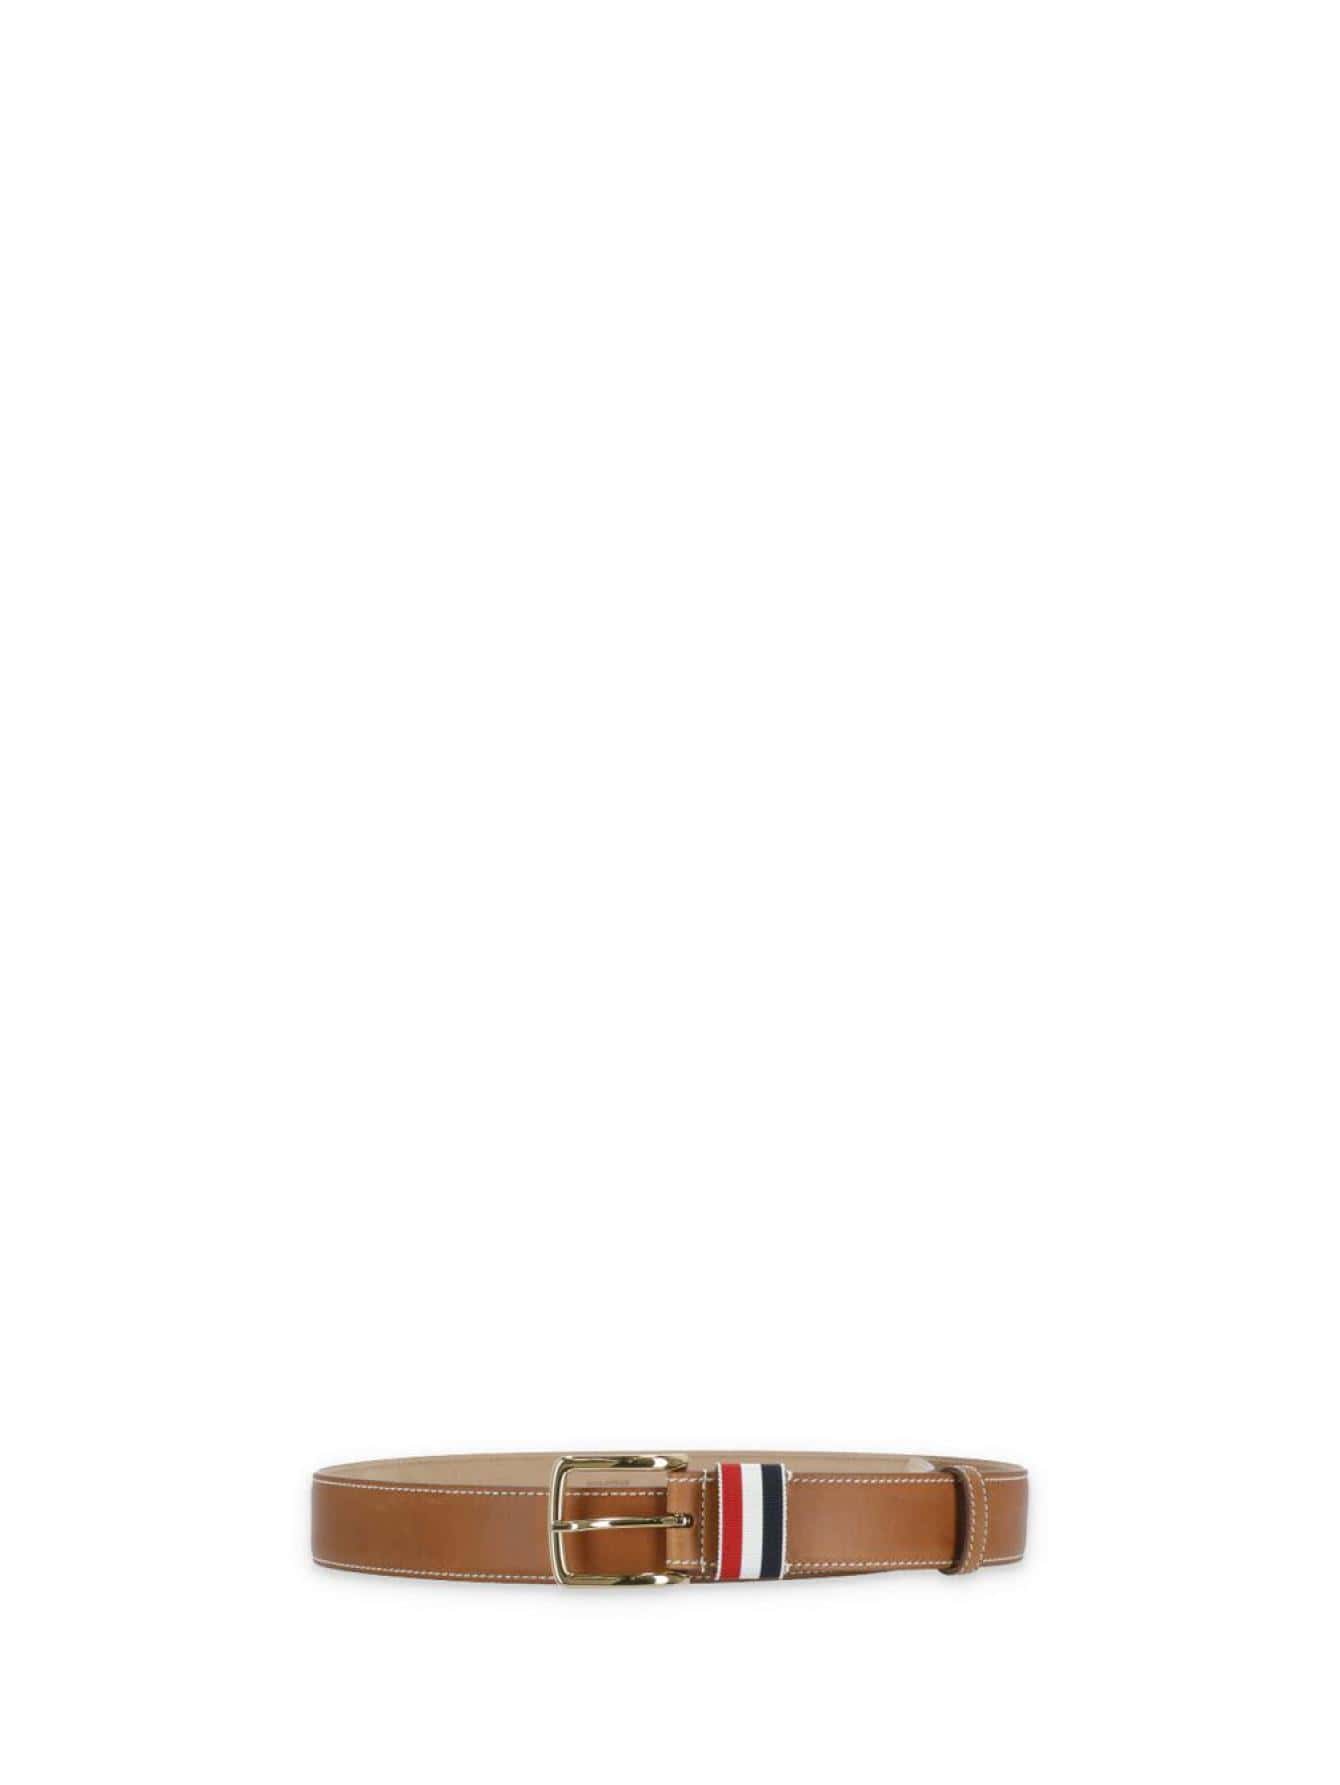 Ремень мужской Thom Browne BROWN MCX039AL0044255, коричневый men belts metal automatic buckle brand high quality leather belts for men famous brand luxury work business strap luxury belt